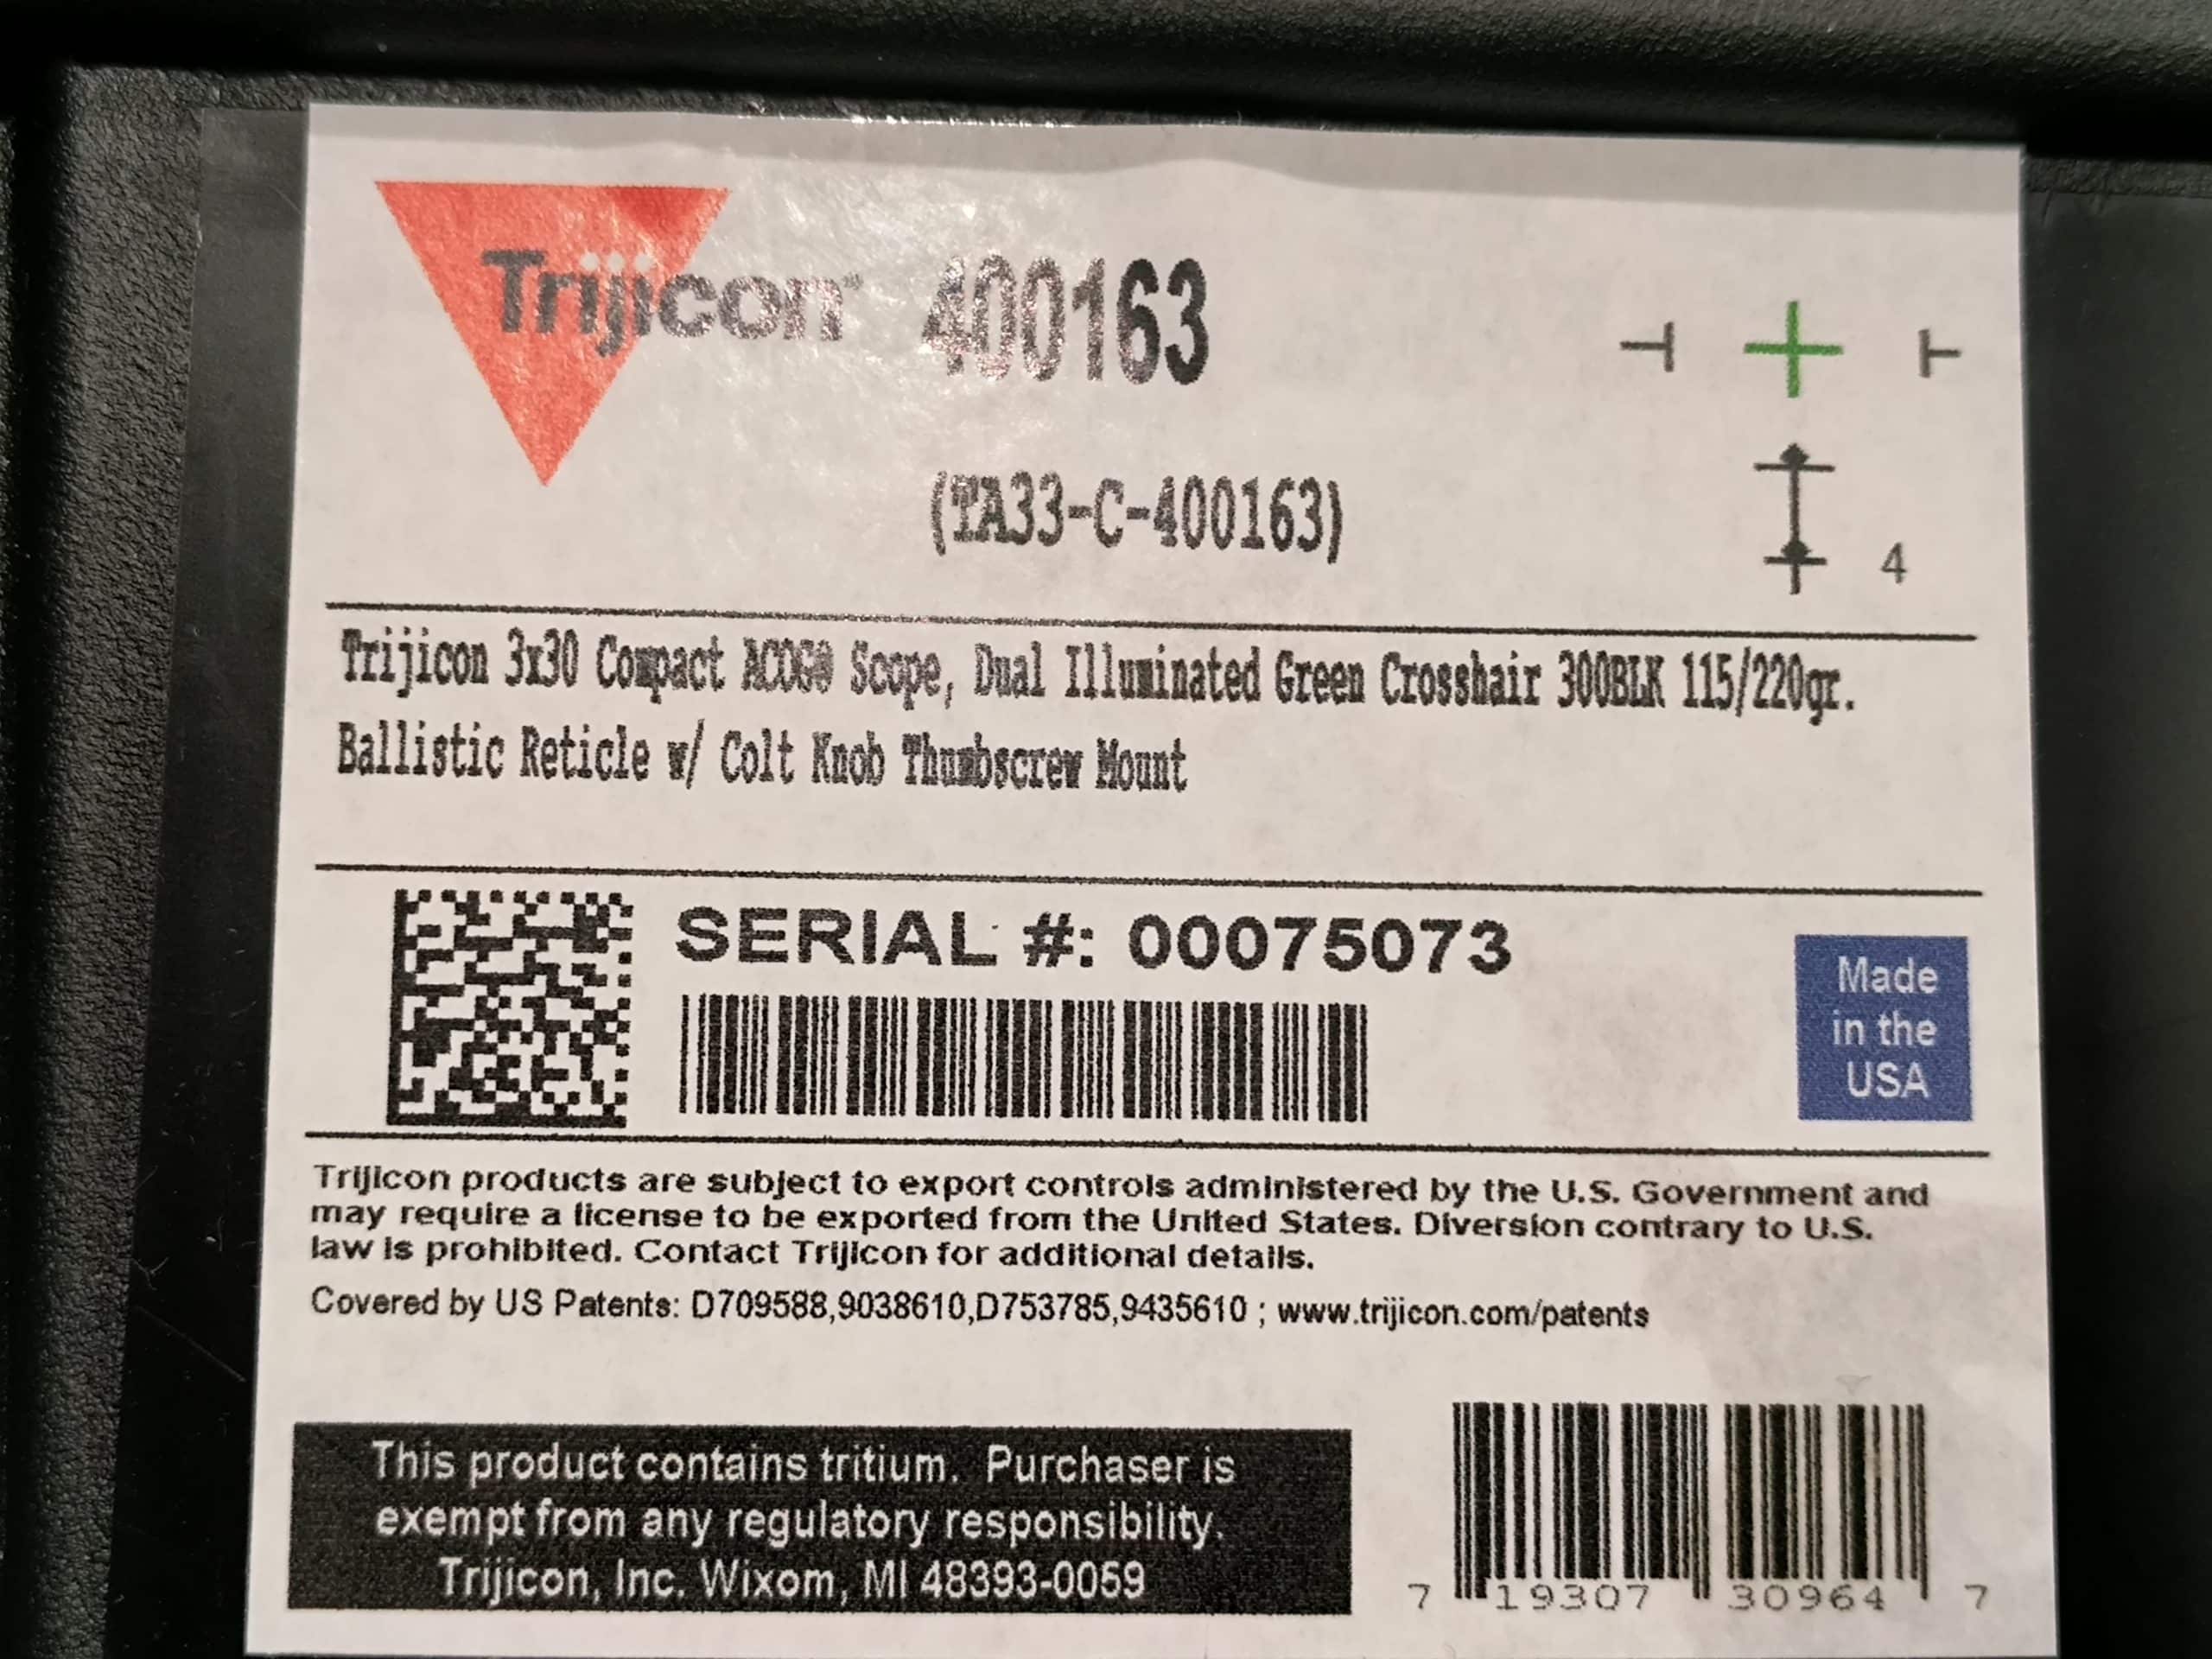 Trijicon 3×30 ACOG Green Crosshair 300BLK 115/220gr 400163